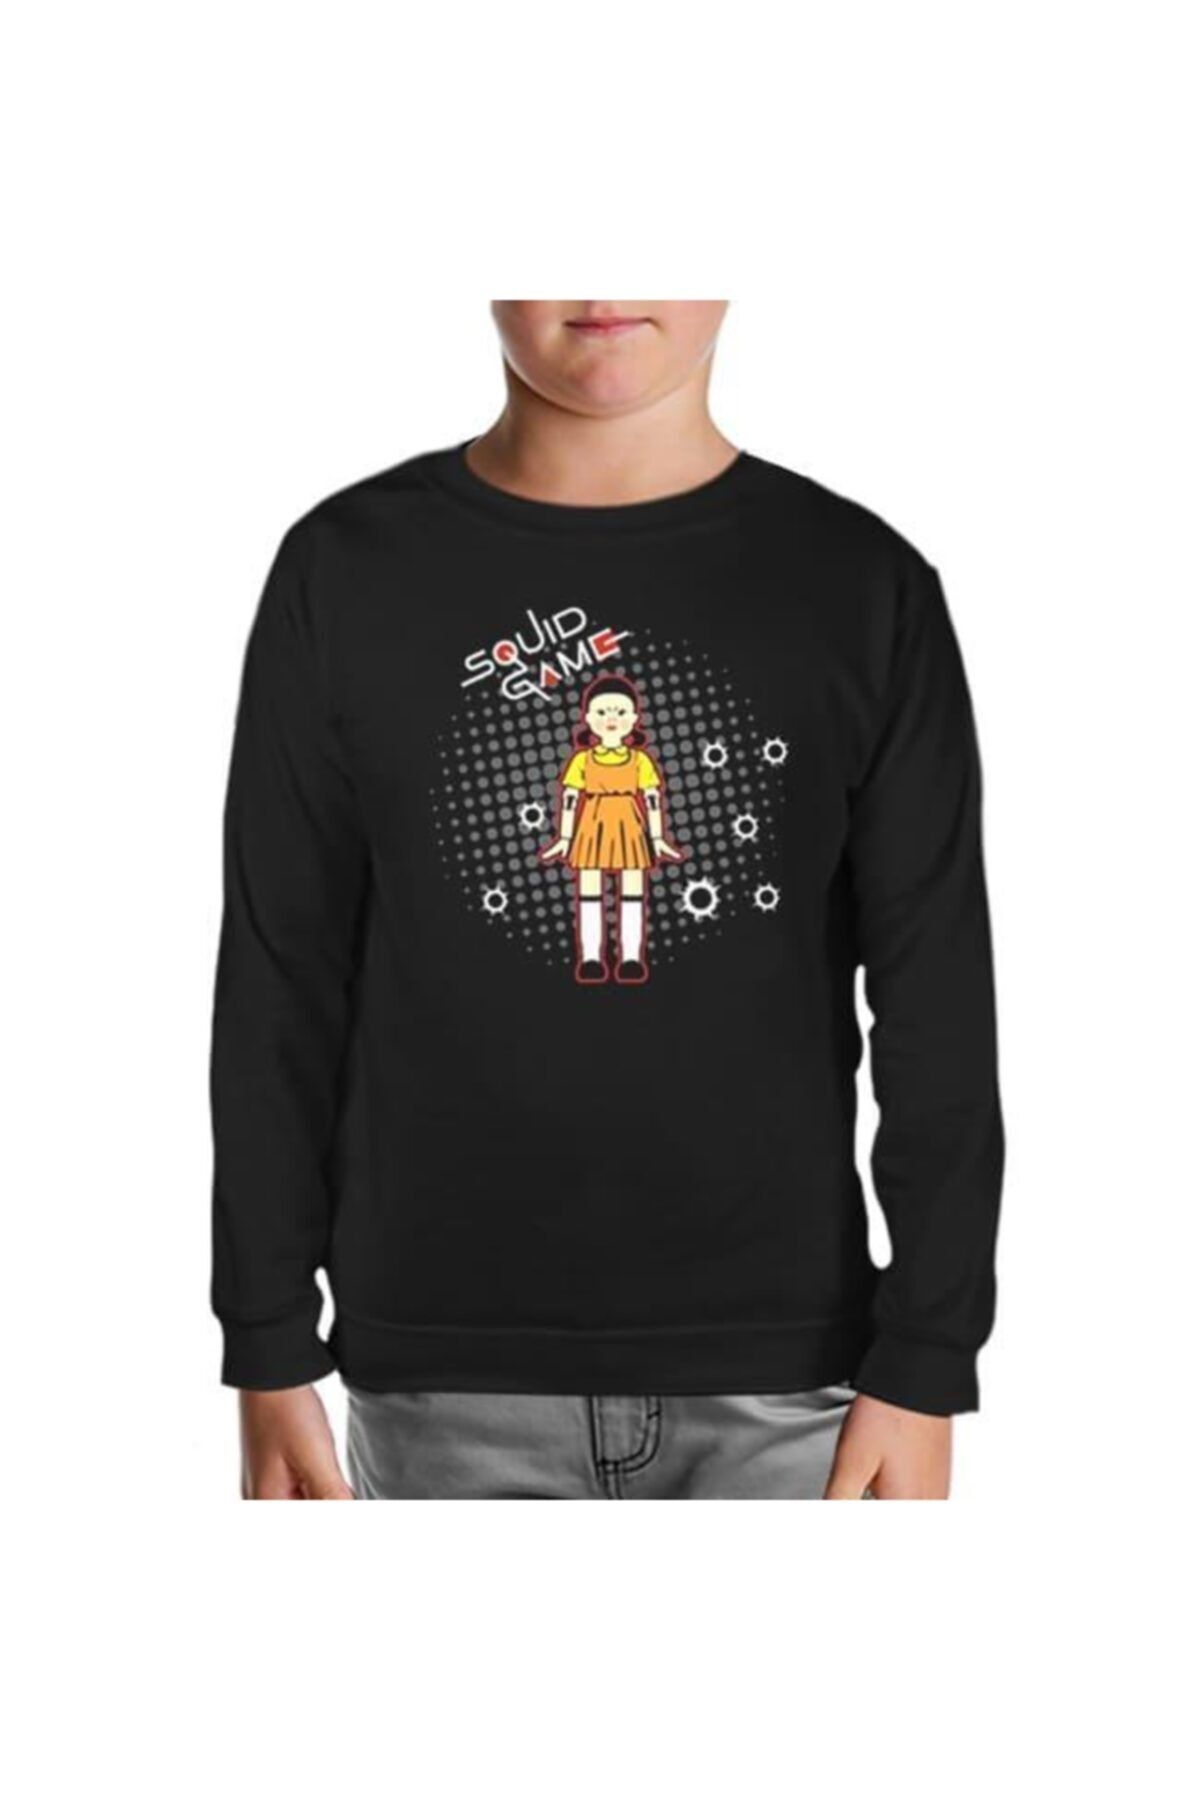 Lord T-Shirt Squid Game - Robot Bebek Mermi Siyah Çocuk Sweatshirt